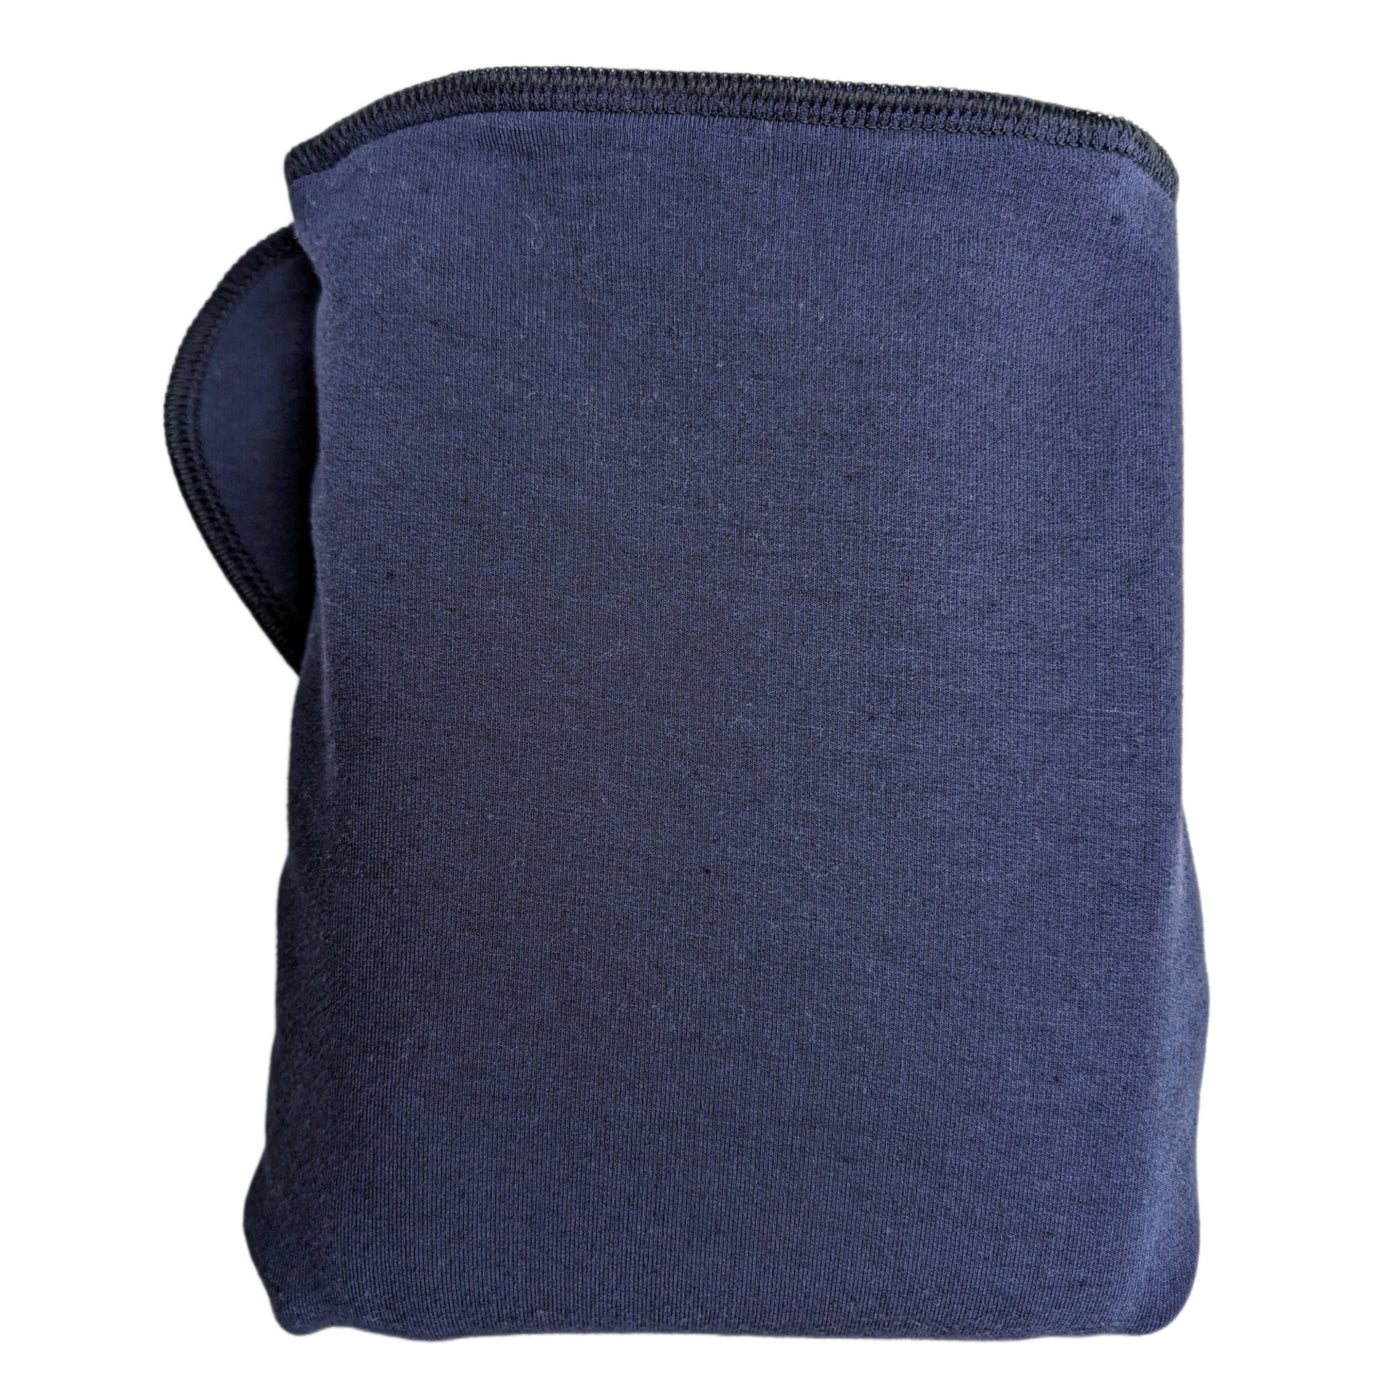 Fixed Flat Cloth Diaper | Bamboo Merino Wool | Heavy Wetter Absorbency | Marine Blue/Heather Gray